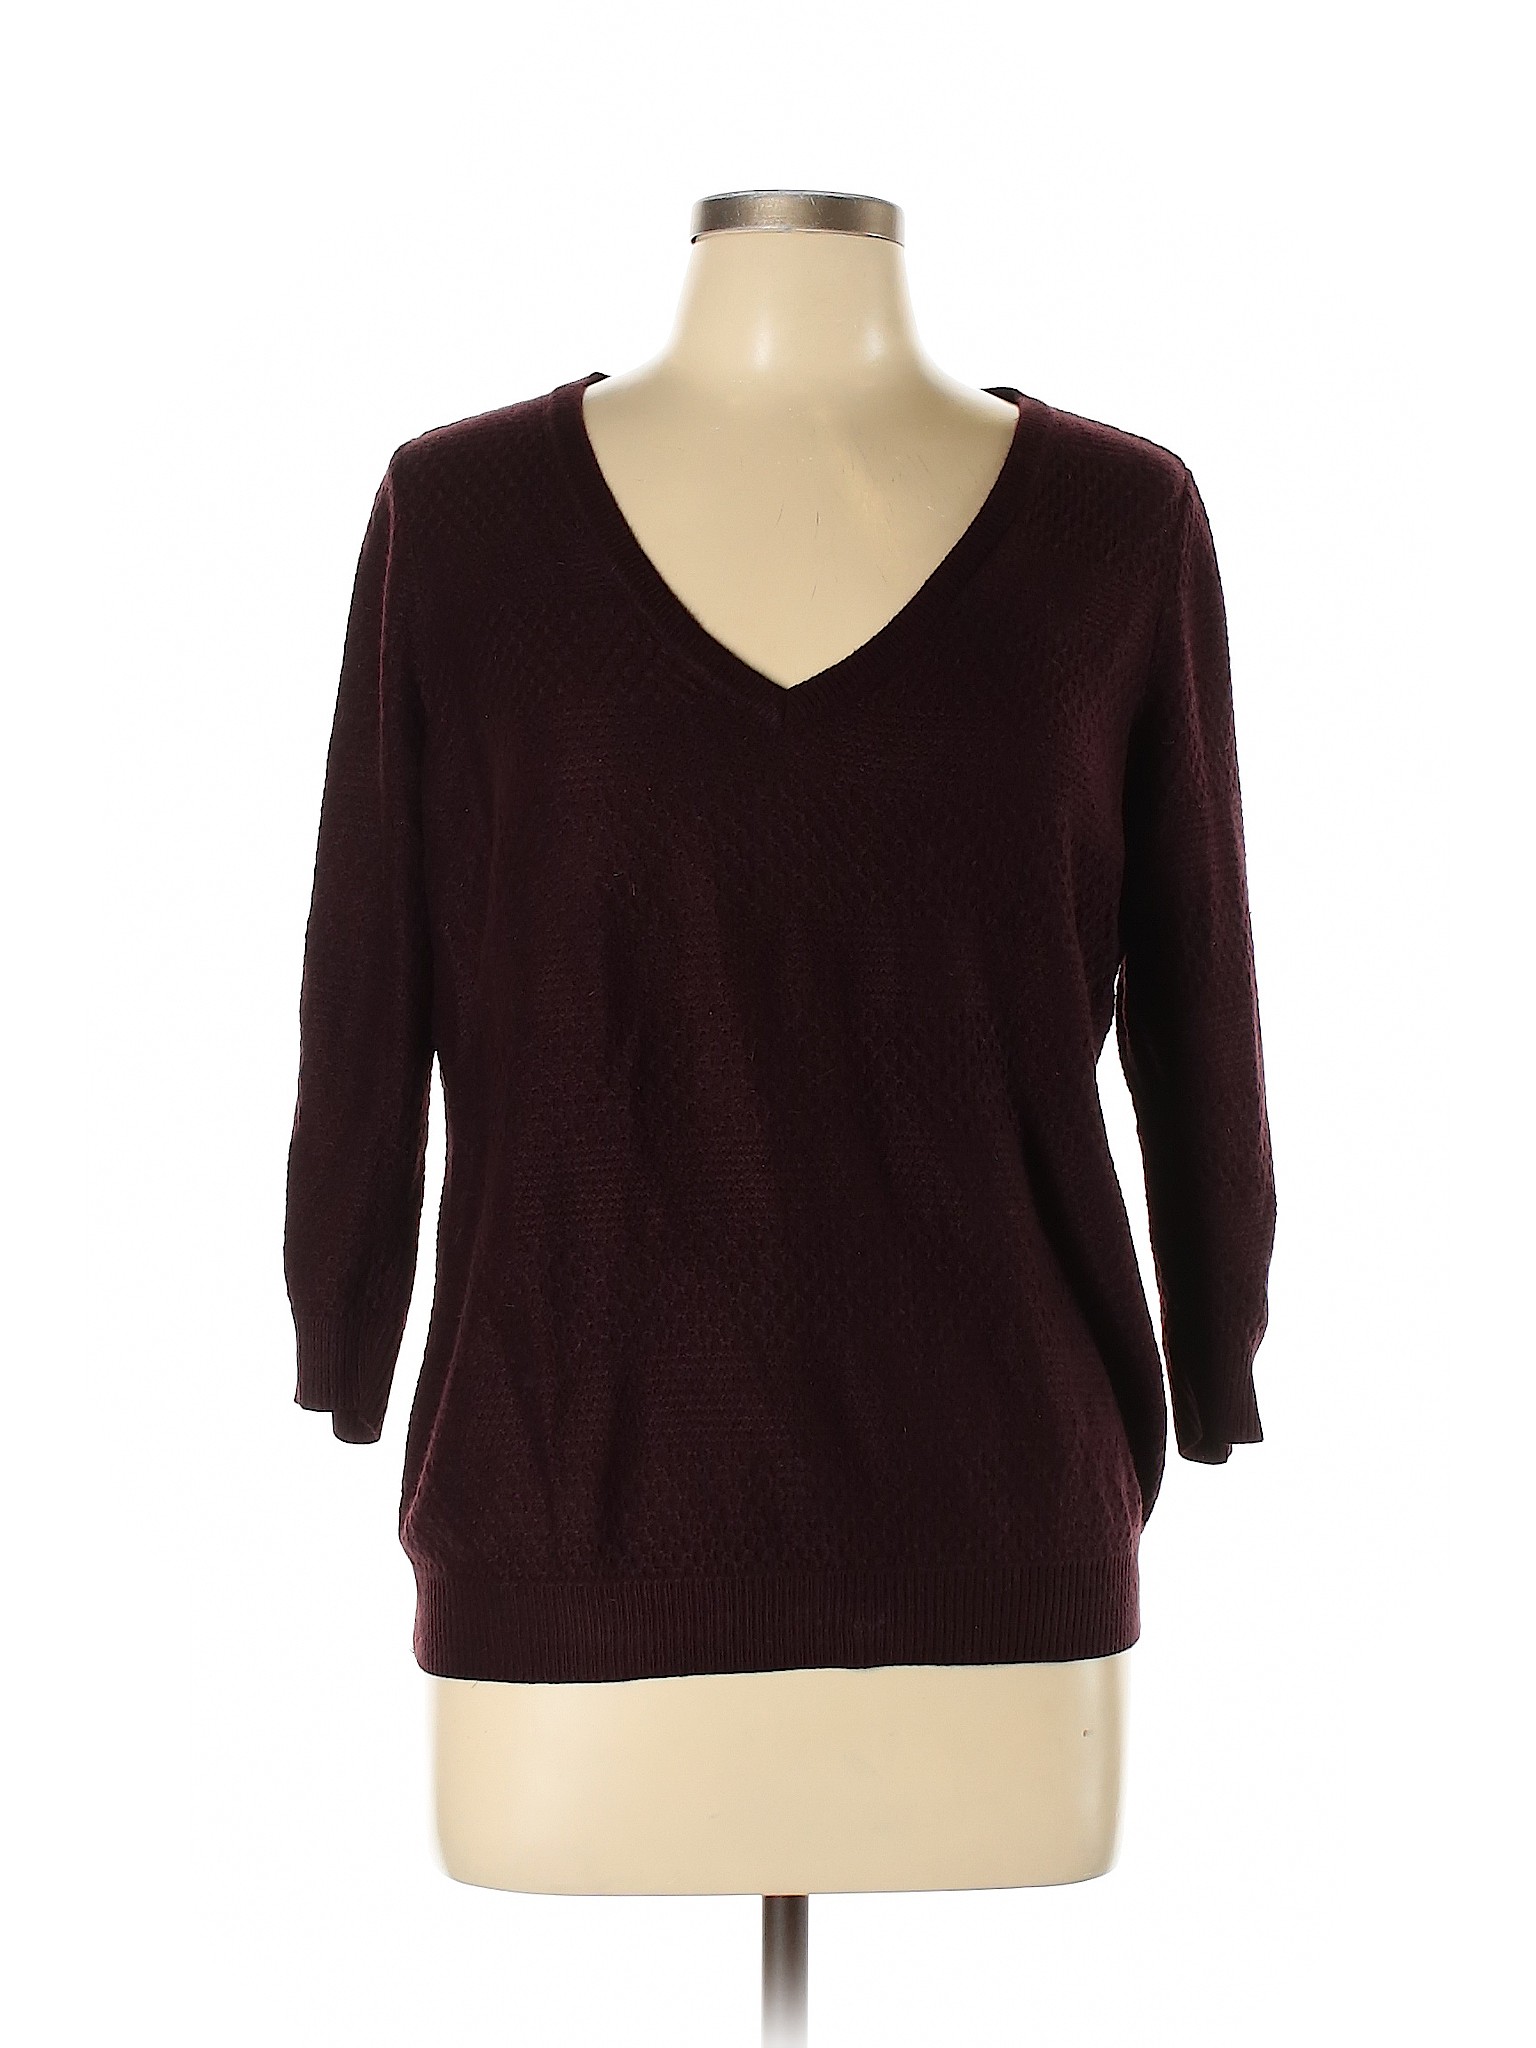 New York & Company Women Brown Pullover Sweater L | eBay